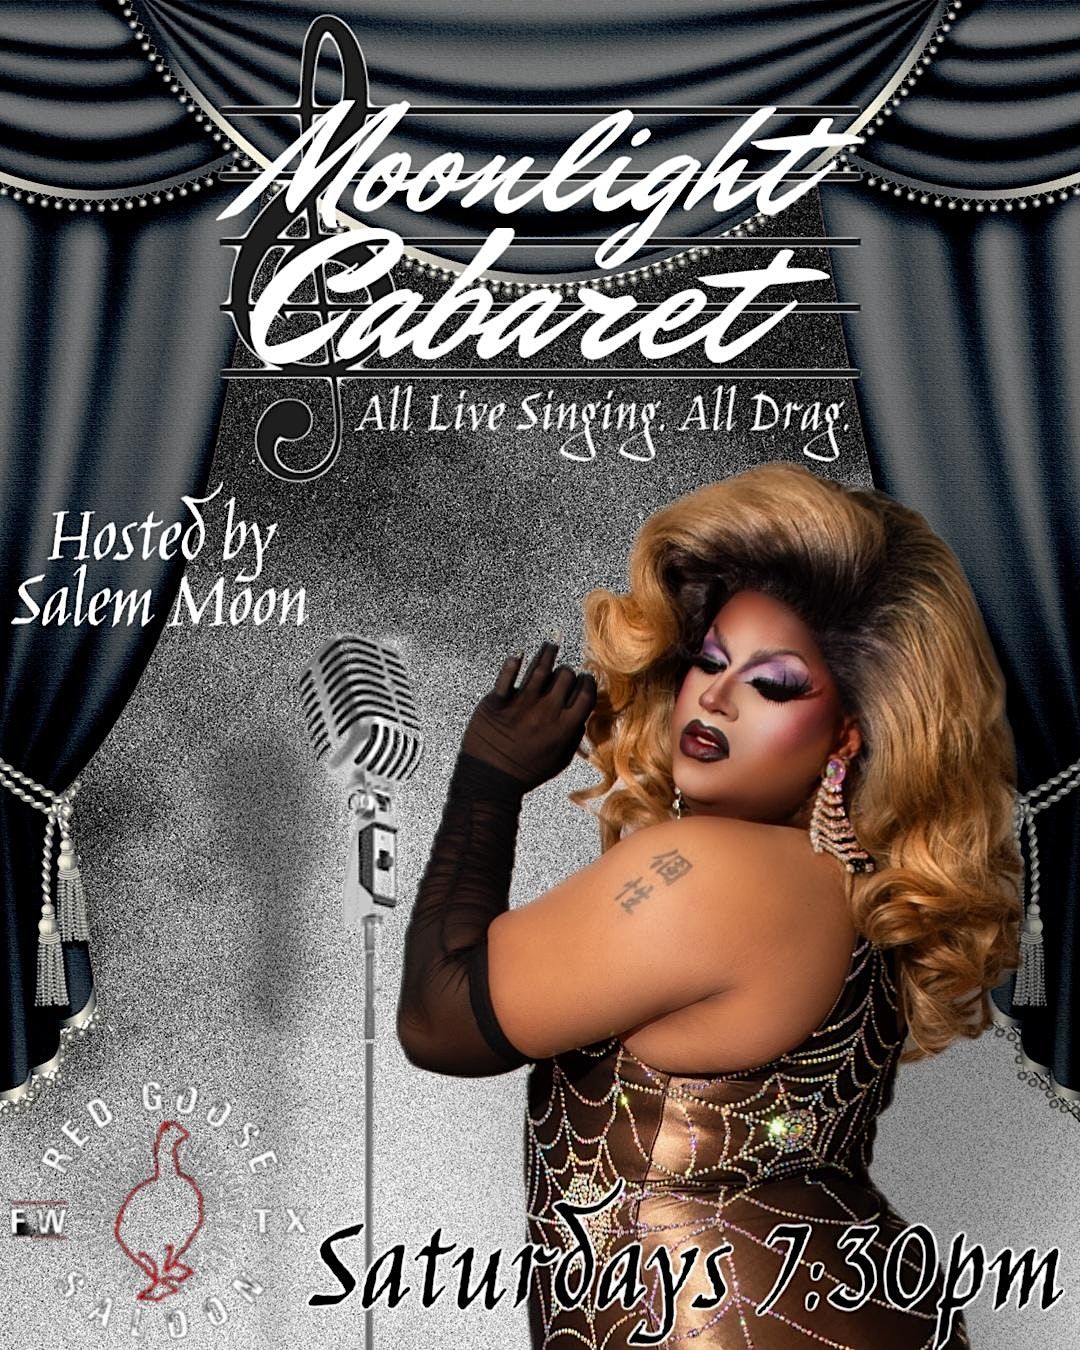 Moonlight Cabaret